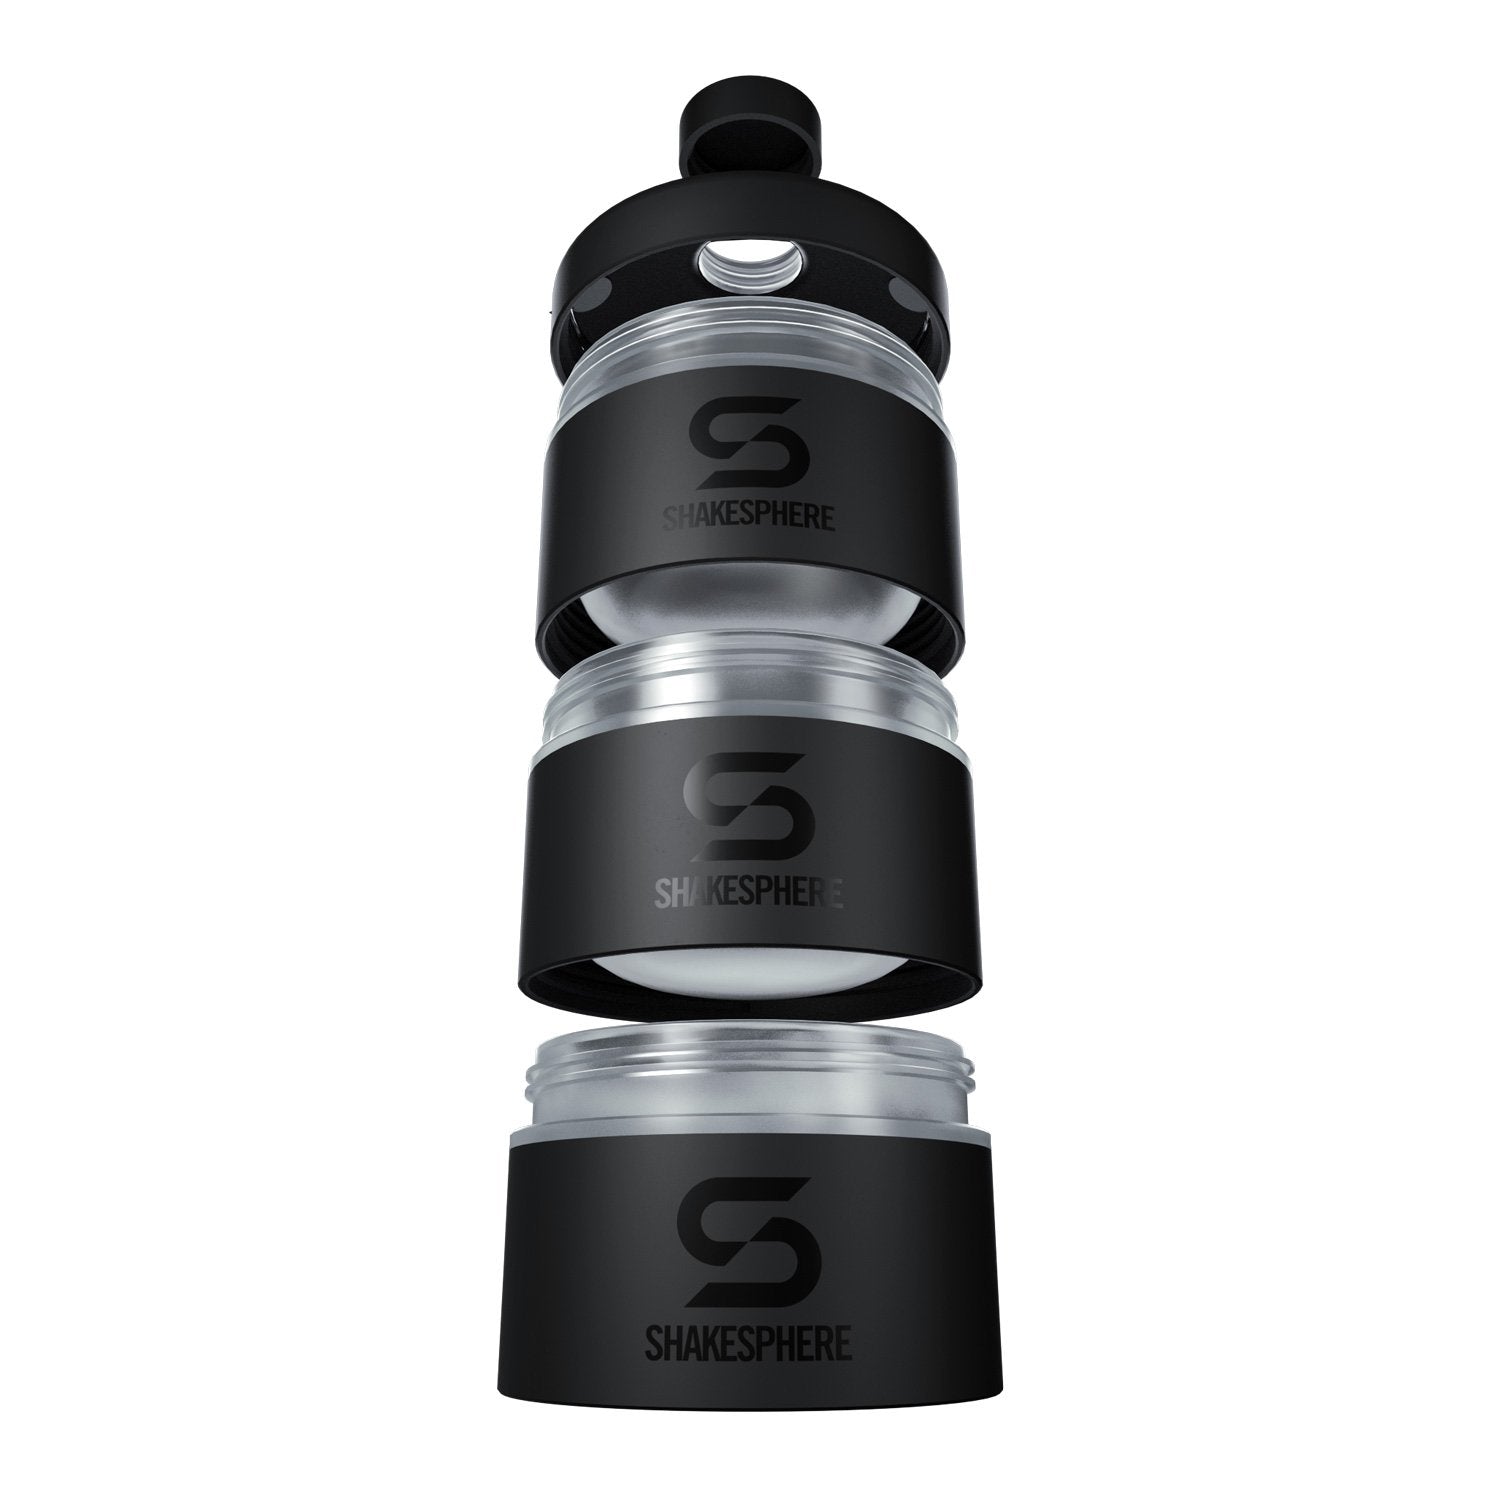 ShakeSphere 三合一營養品分裝盒 迷霧黑 透明隔層 85g / 3oz